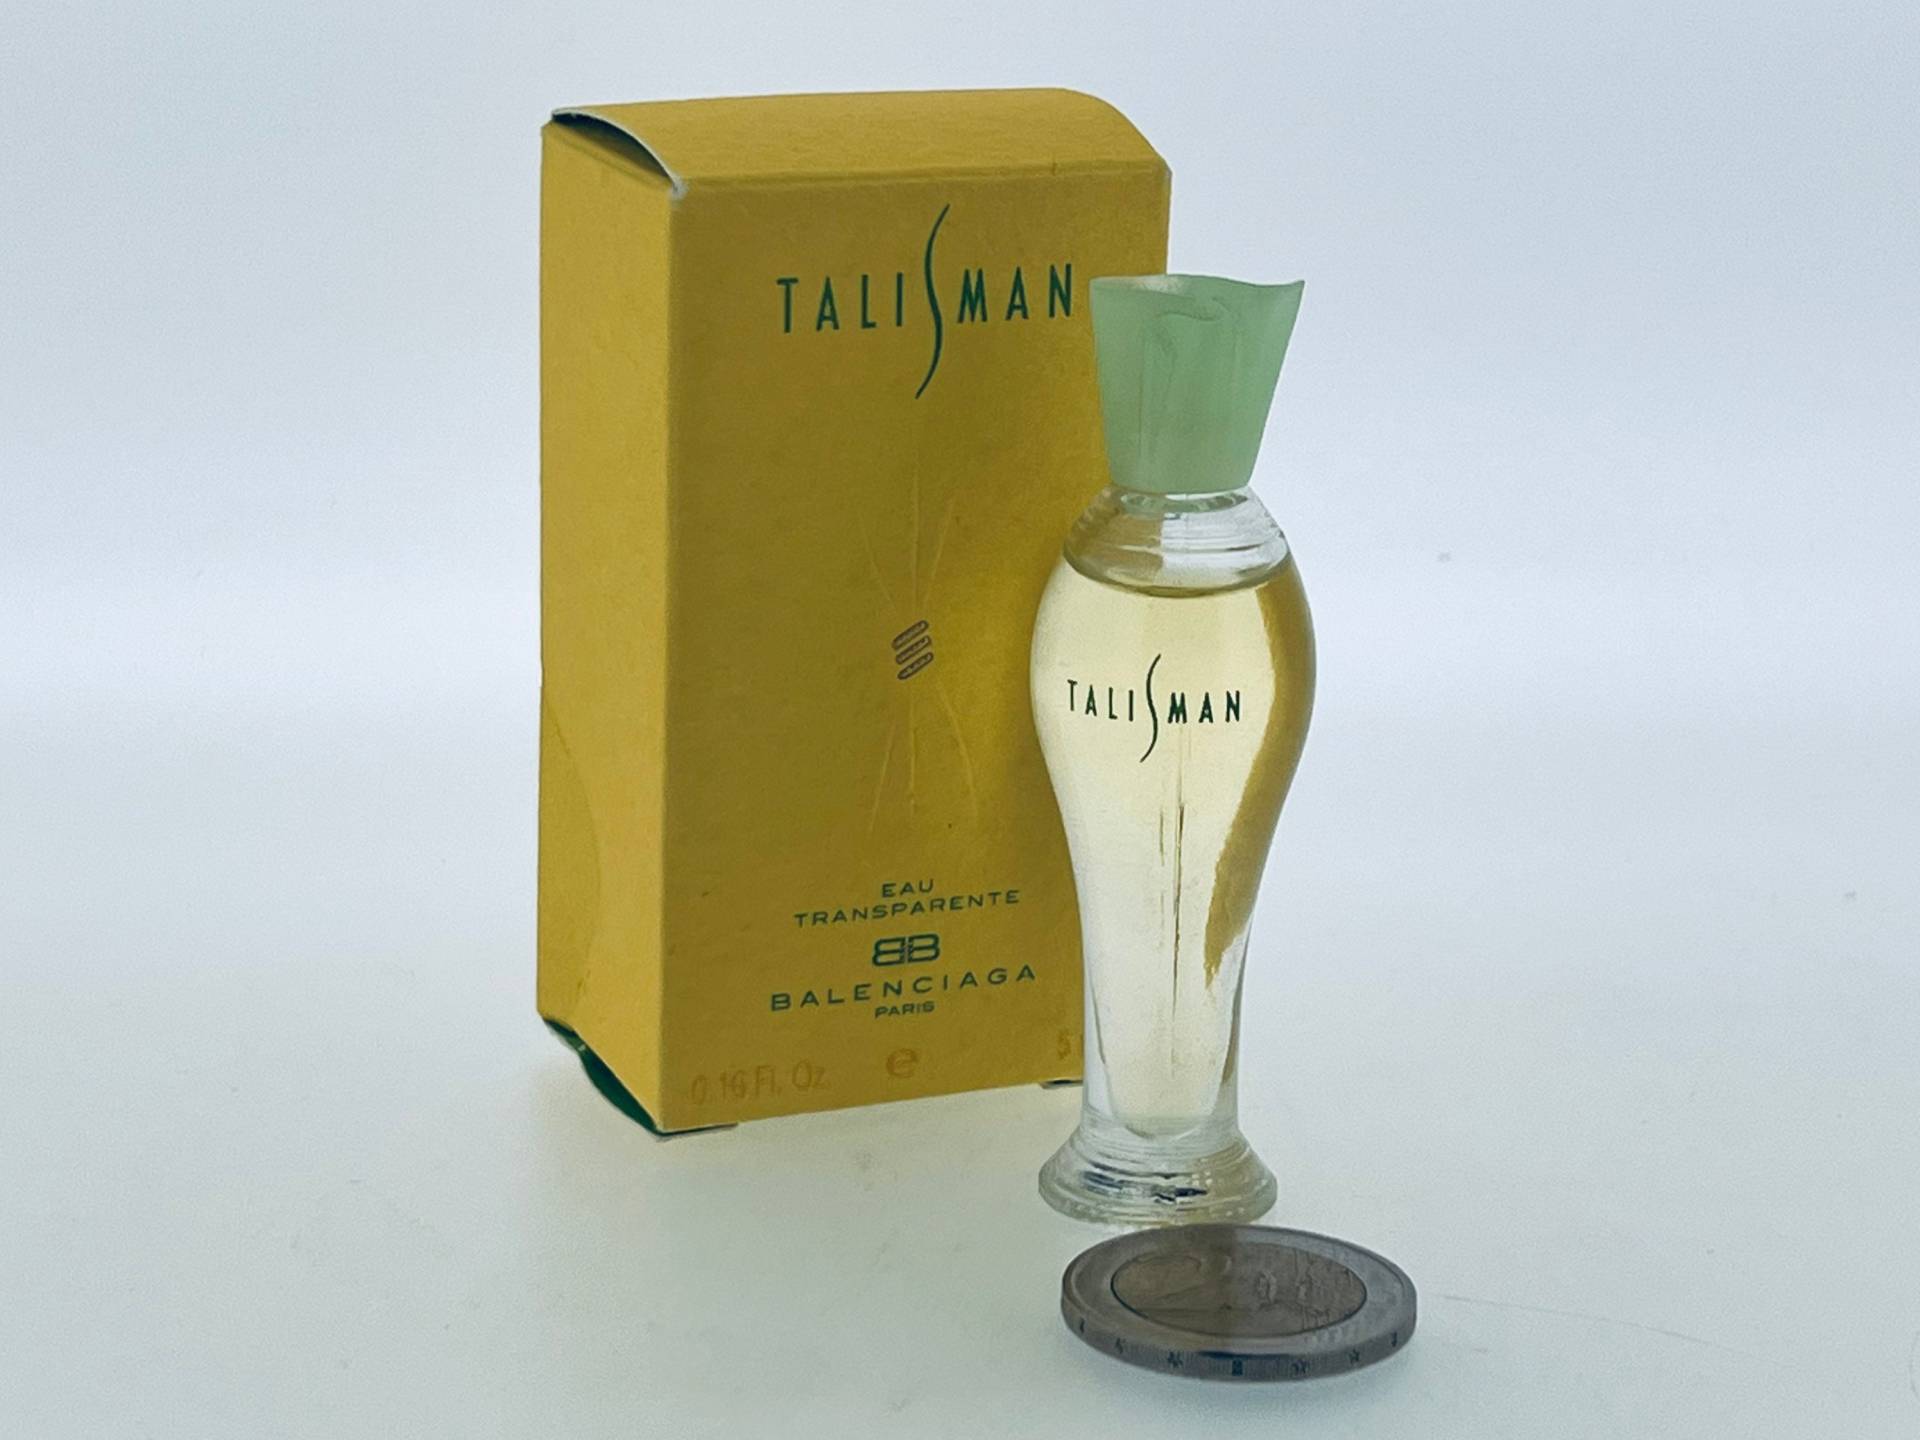 Vintage Miniatur, Talisman, Balenciaga 1996 Eau Transparente 5 Ml von Etsy - VintagGlamour